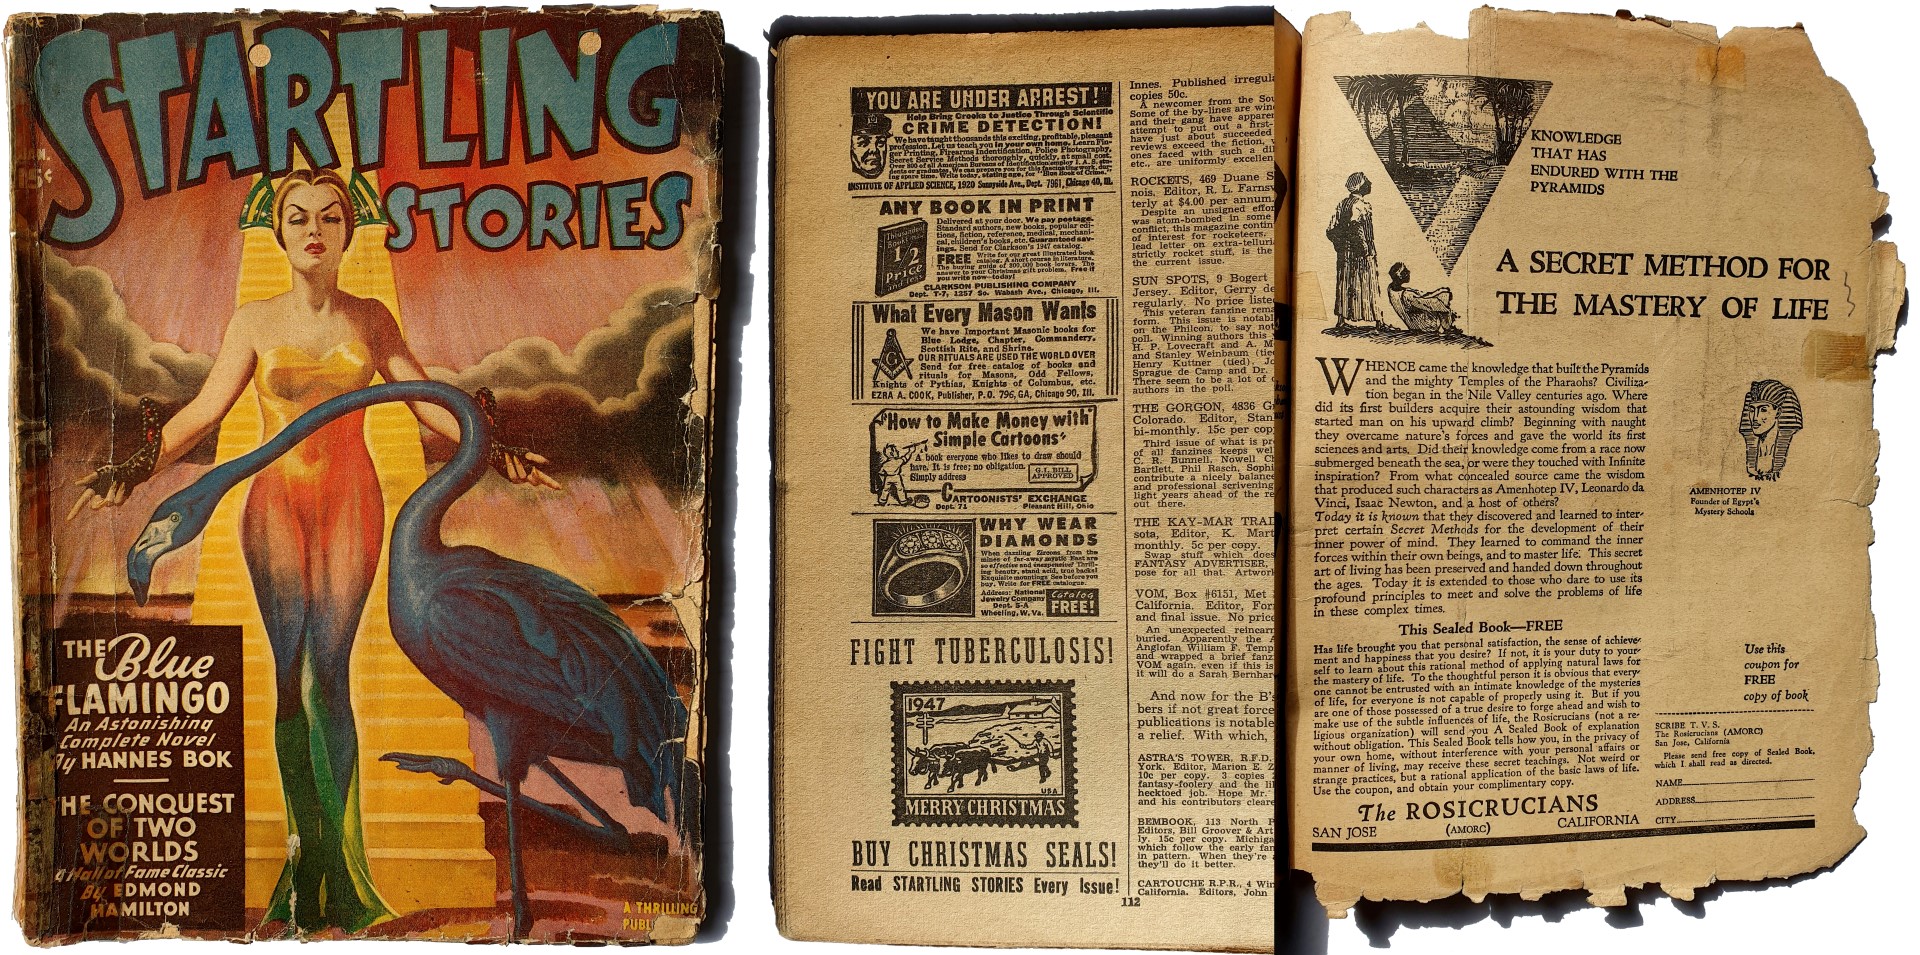 Startling Stories 1948